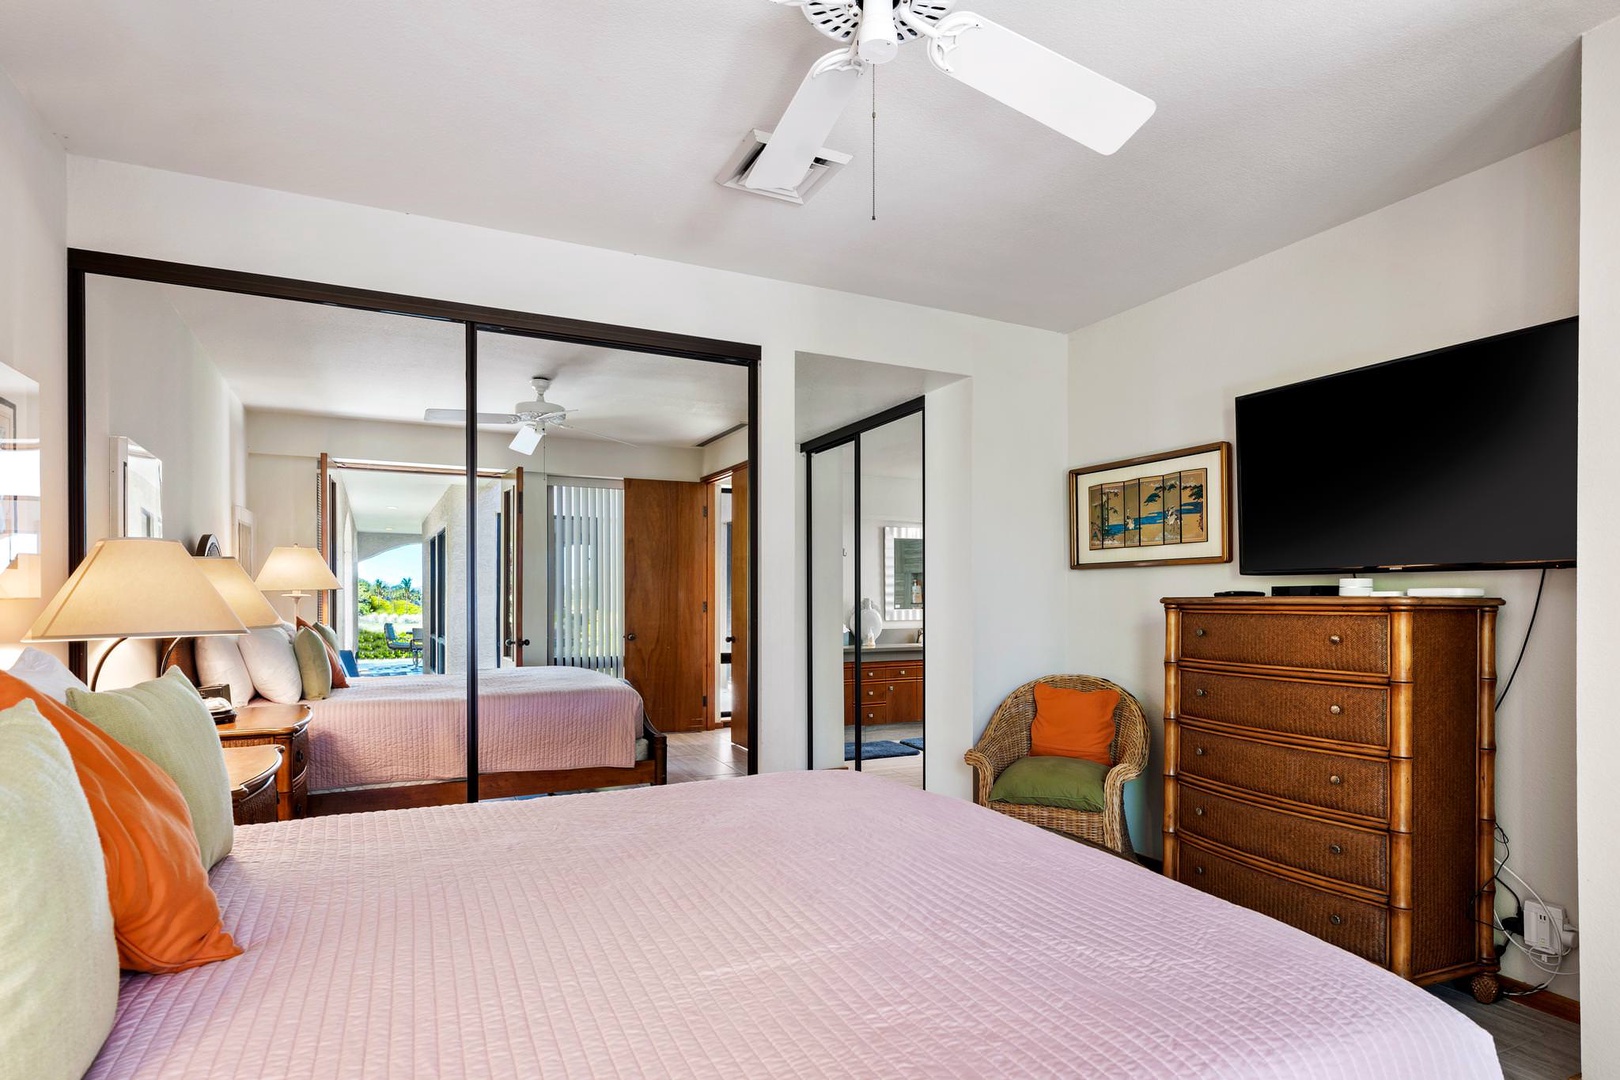 1st master bedroom: King bed, 50" Smart TV, en suite bathroom